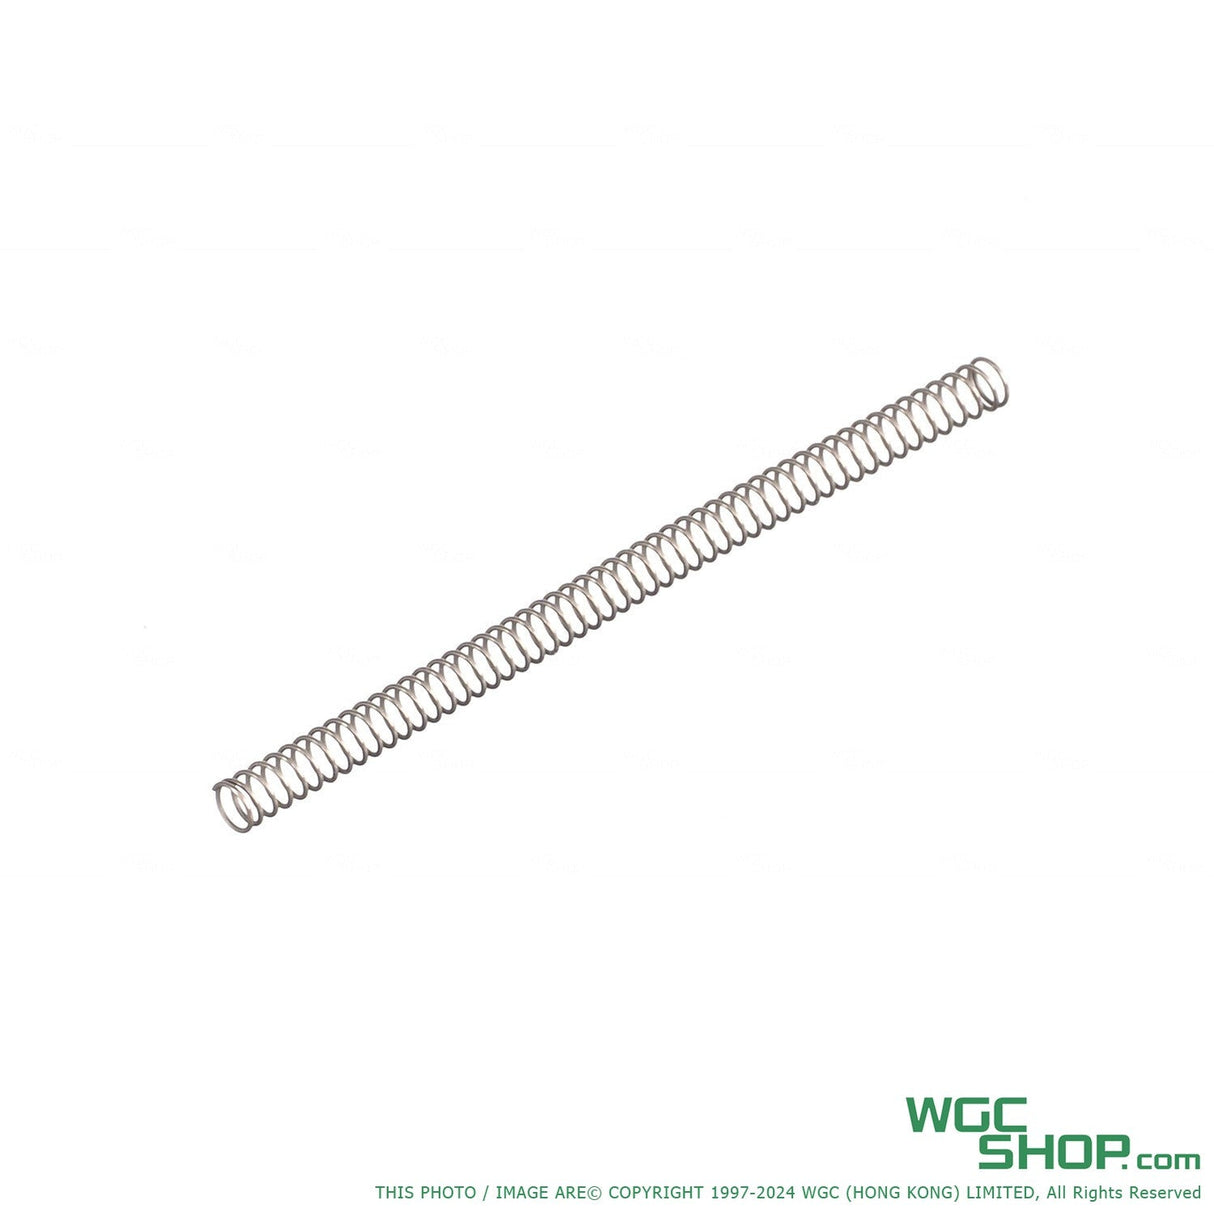 VFC Original Parts - HK45 GBB Loading Nozzle Spring ( VGC6SPG013 )